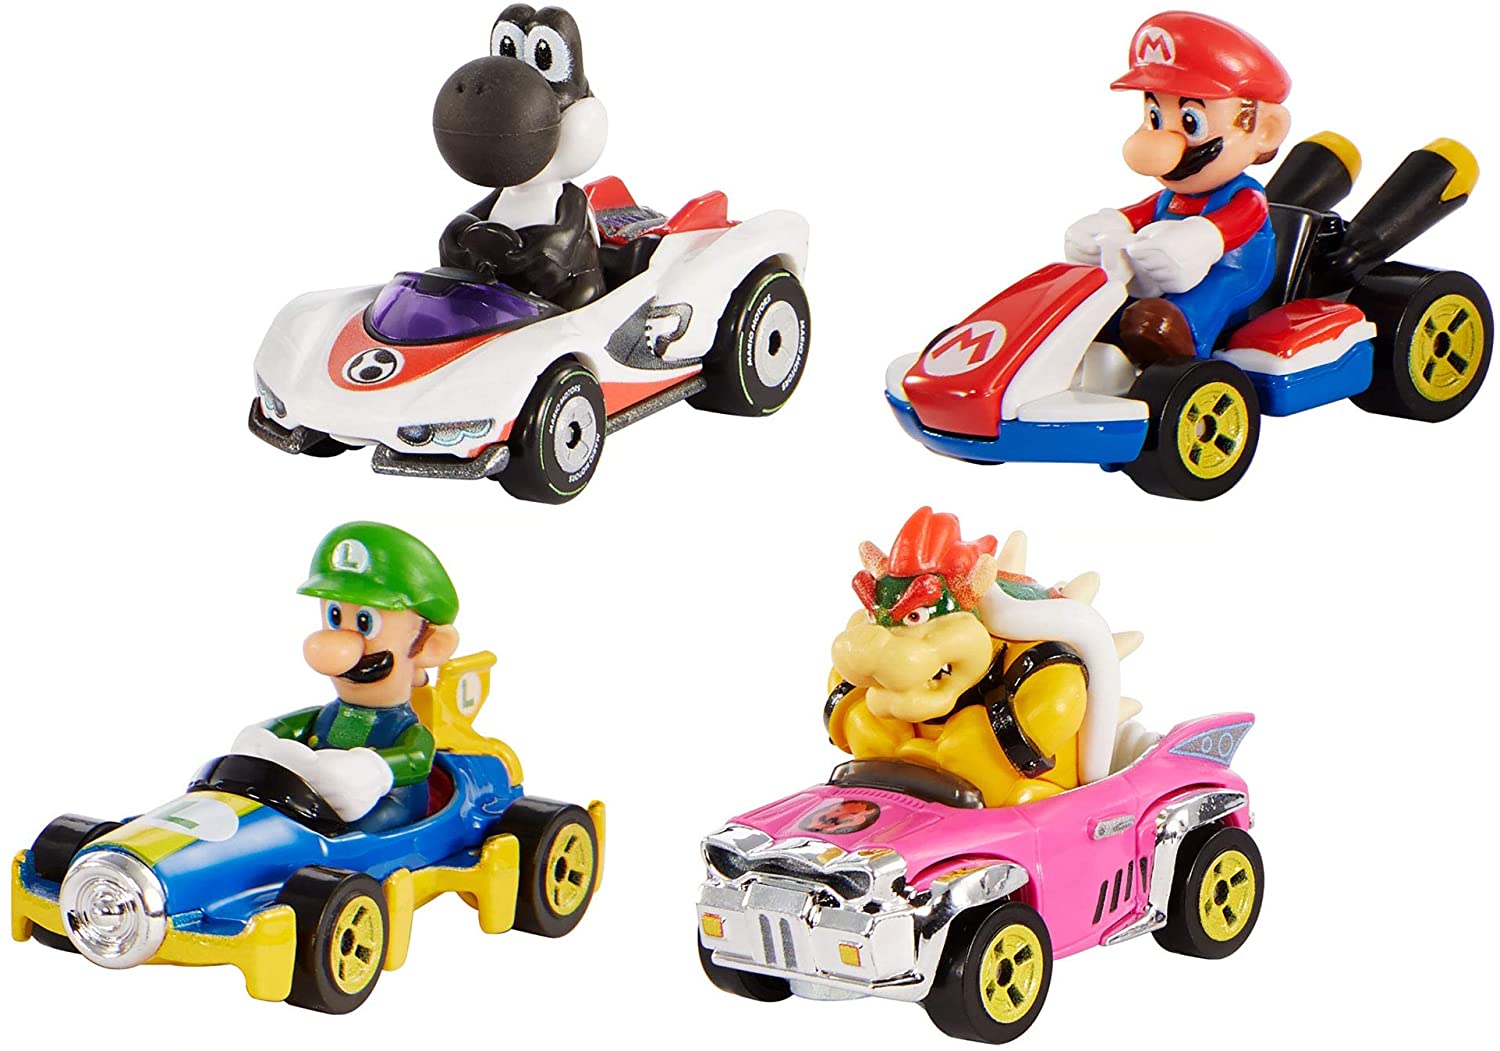 Hot Wheels Gln53 Mario Kart Figures And Karts As Hot Wheels Die-Cast Vehicl